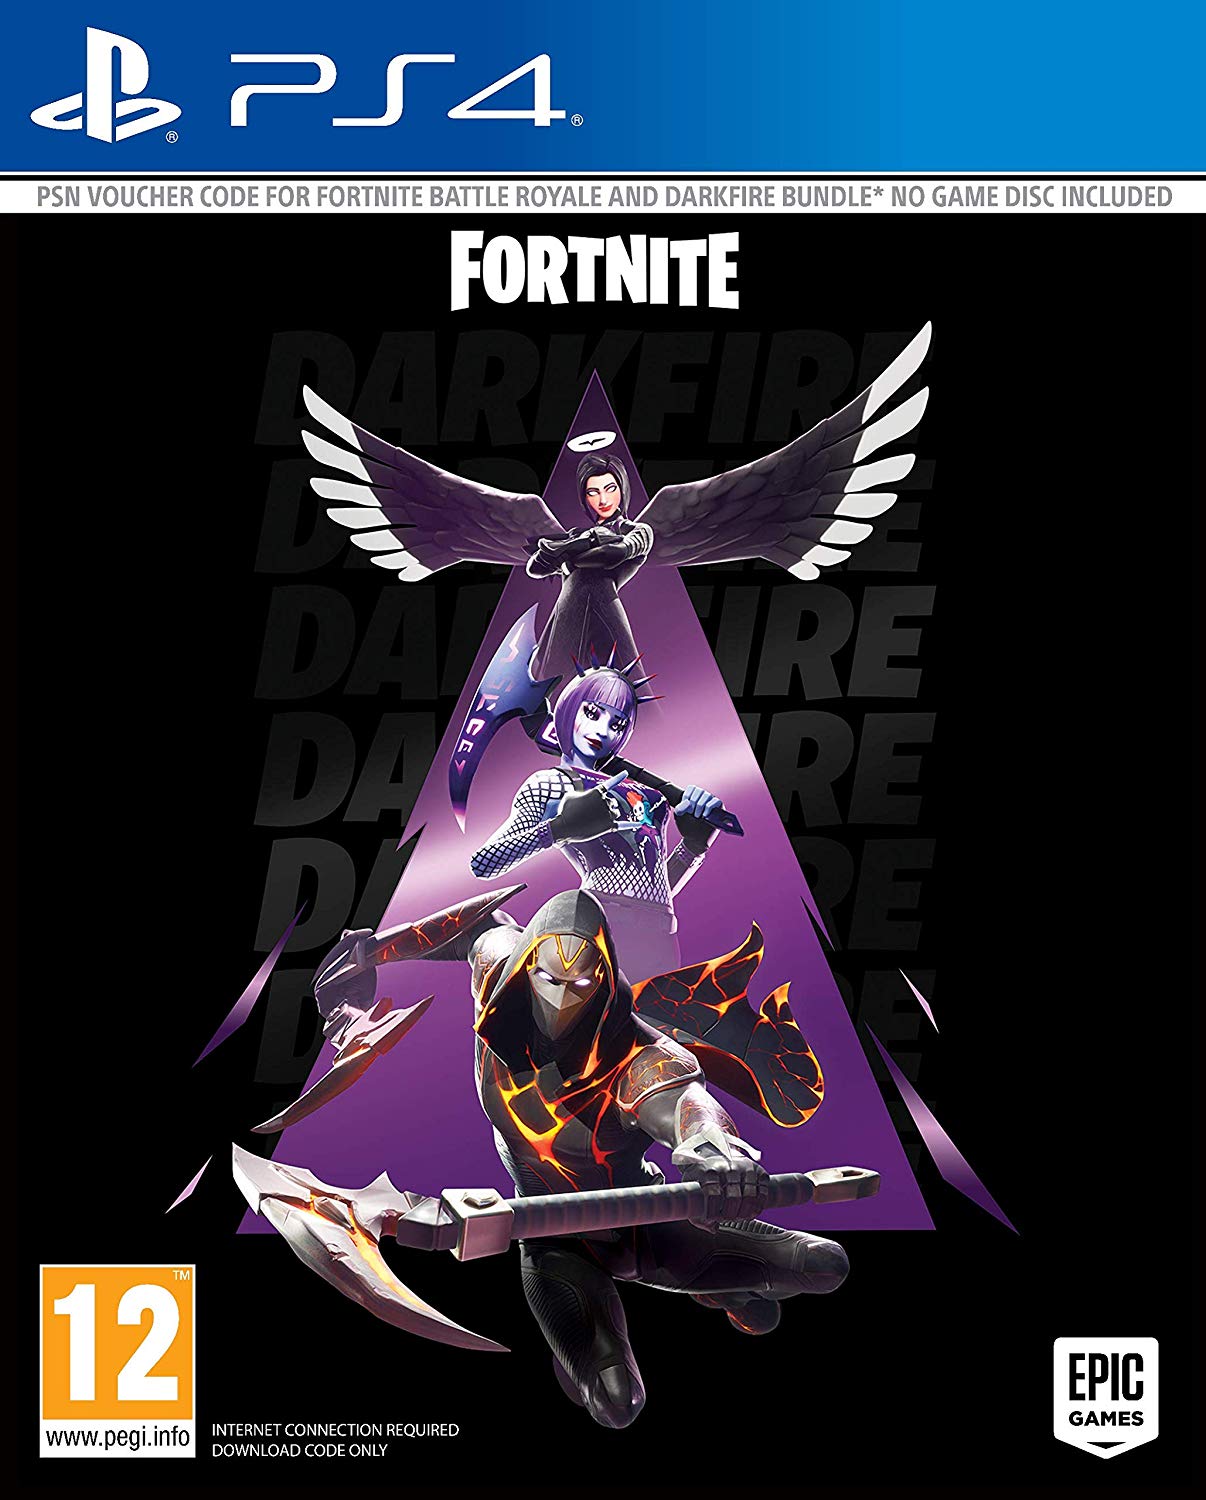 Fortnite Darkfire Bundle Digital Download Key (Playstation 4)